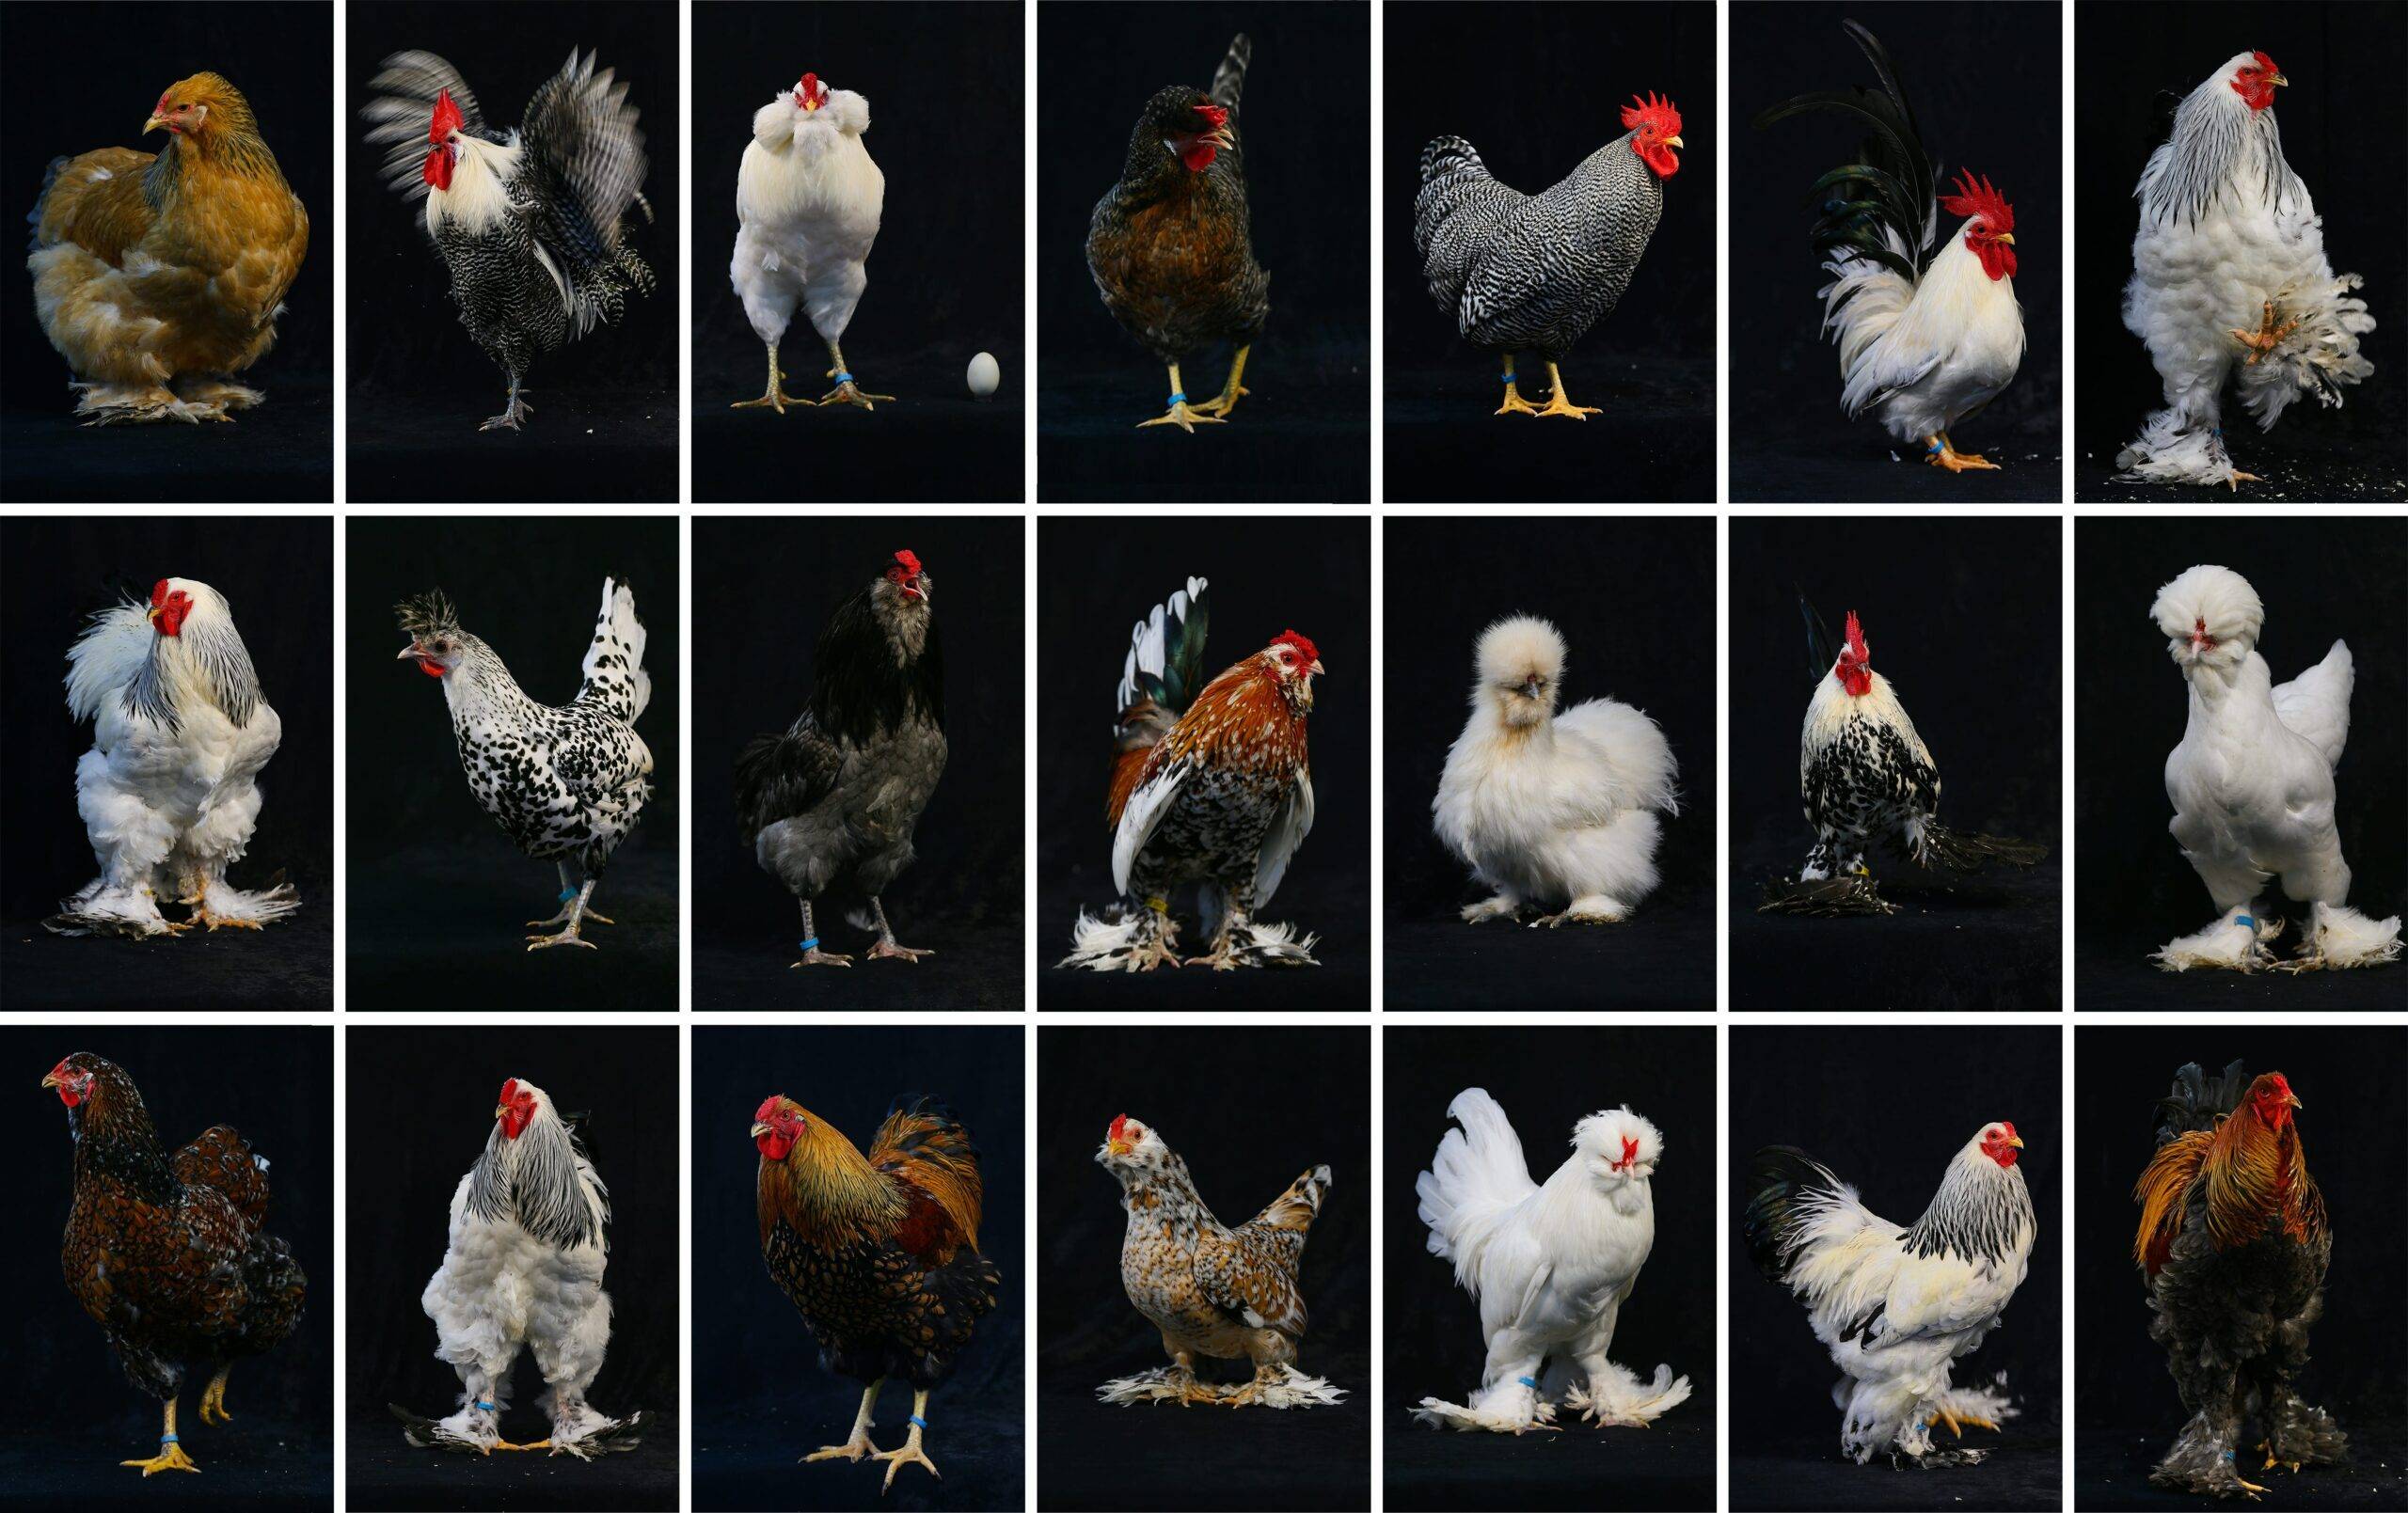 Brahma ‐ The Poultry Club